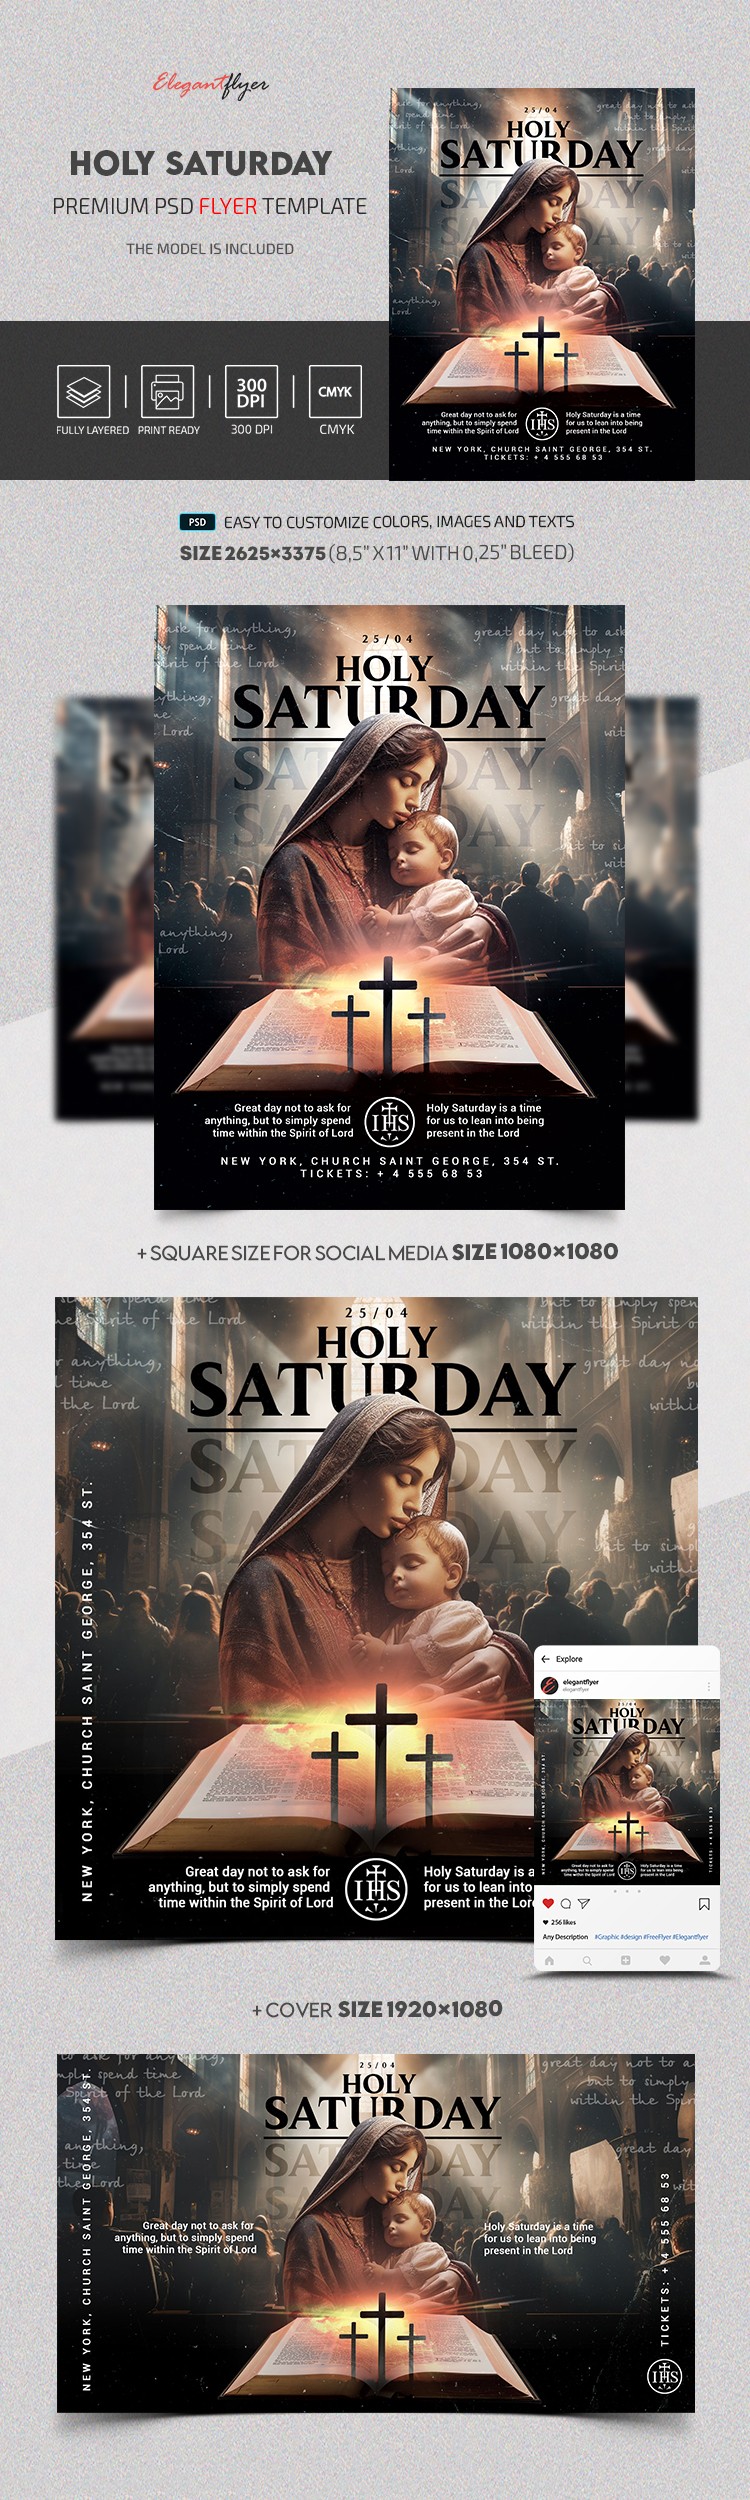 Sabato Santo by ElegantFlyer